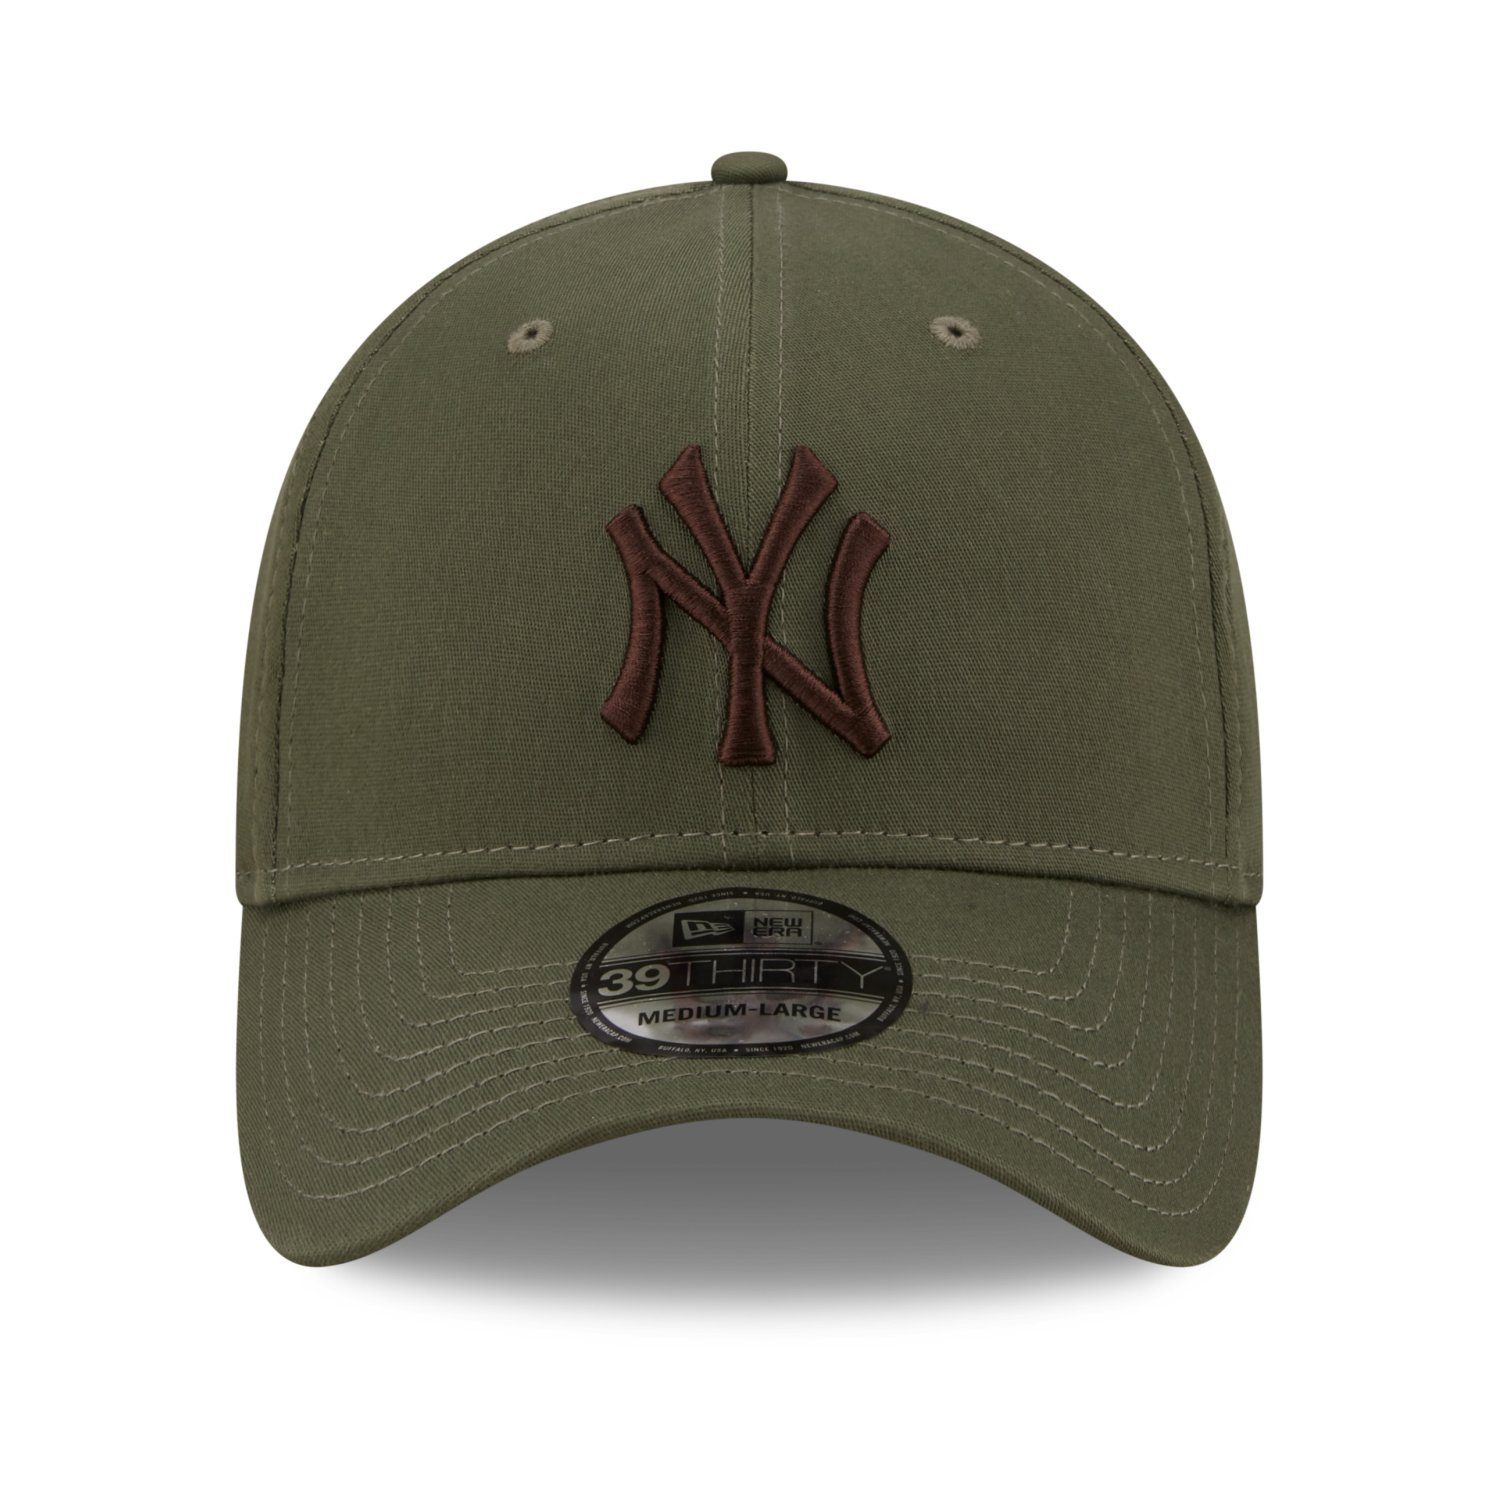 Yankees New Cap Era Stretch York 39Thirty Flex New